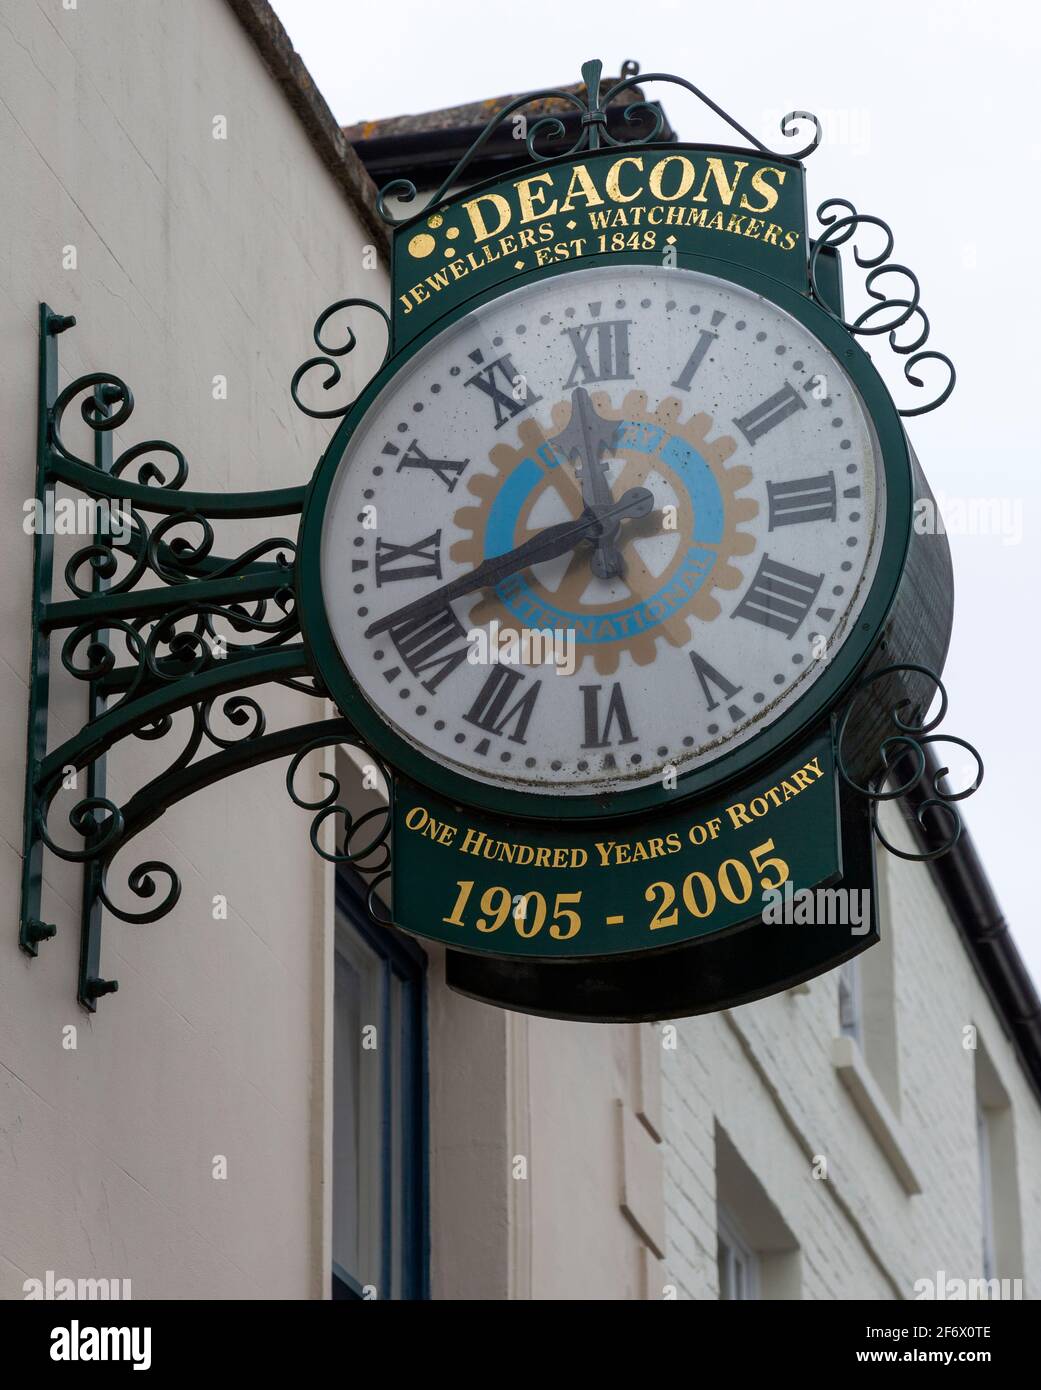 Reloj exterior Deacons Jewelers Shop est 1848, Royal Wootton Bassett, Wiltshire, Inglaterra, Reino Unido Foto de stock